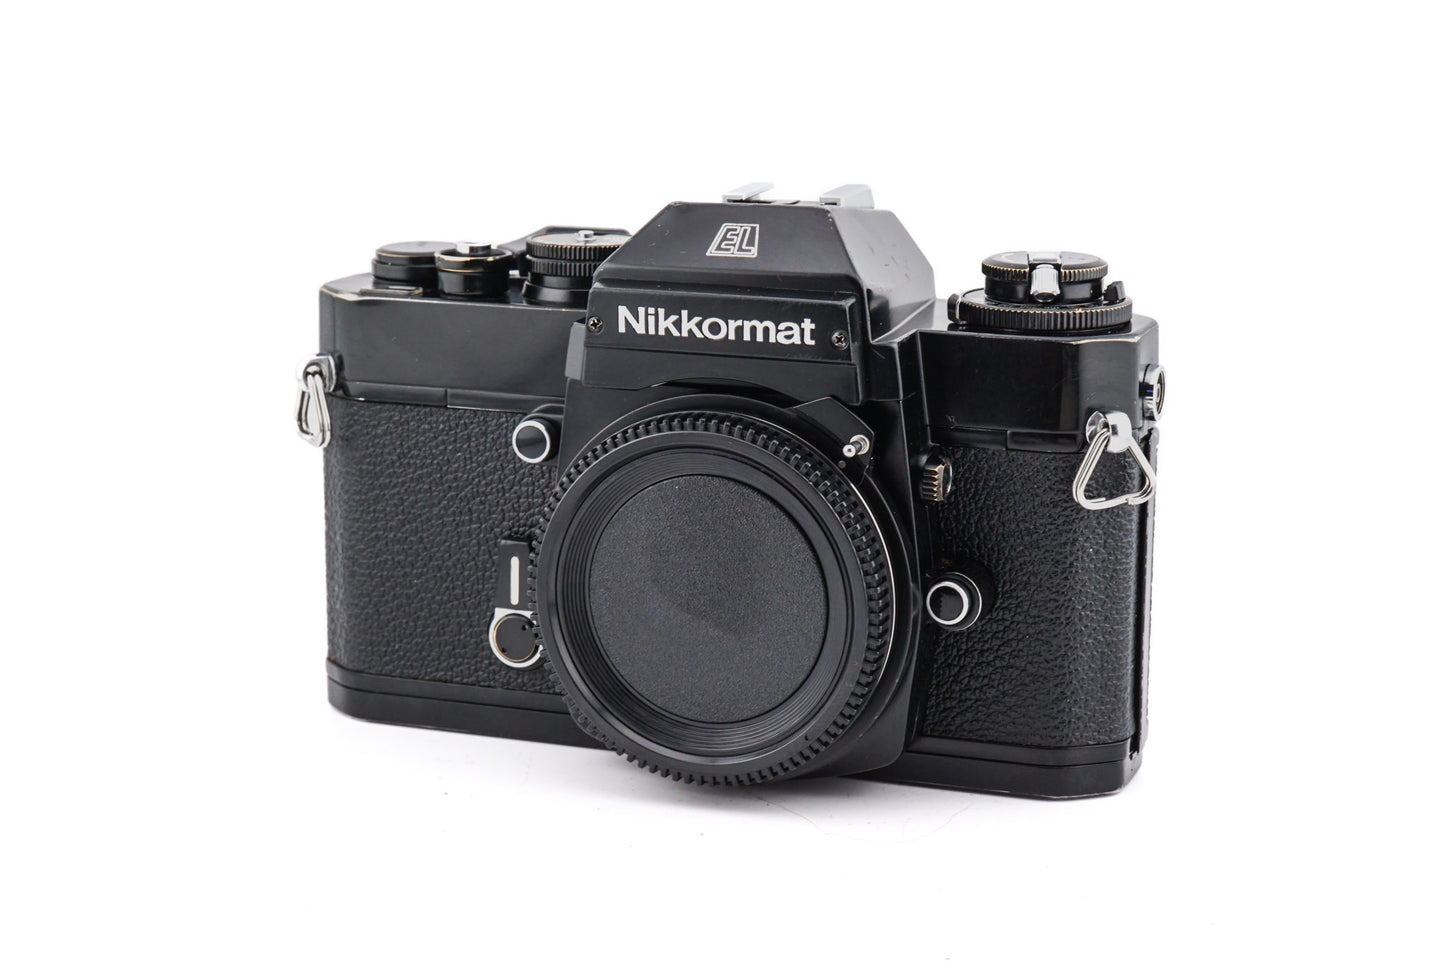 Nikon Nikkormat EL - Camera